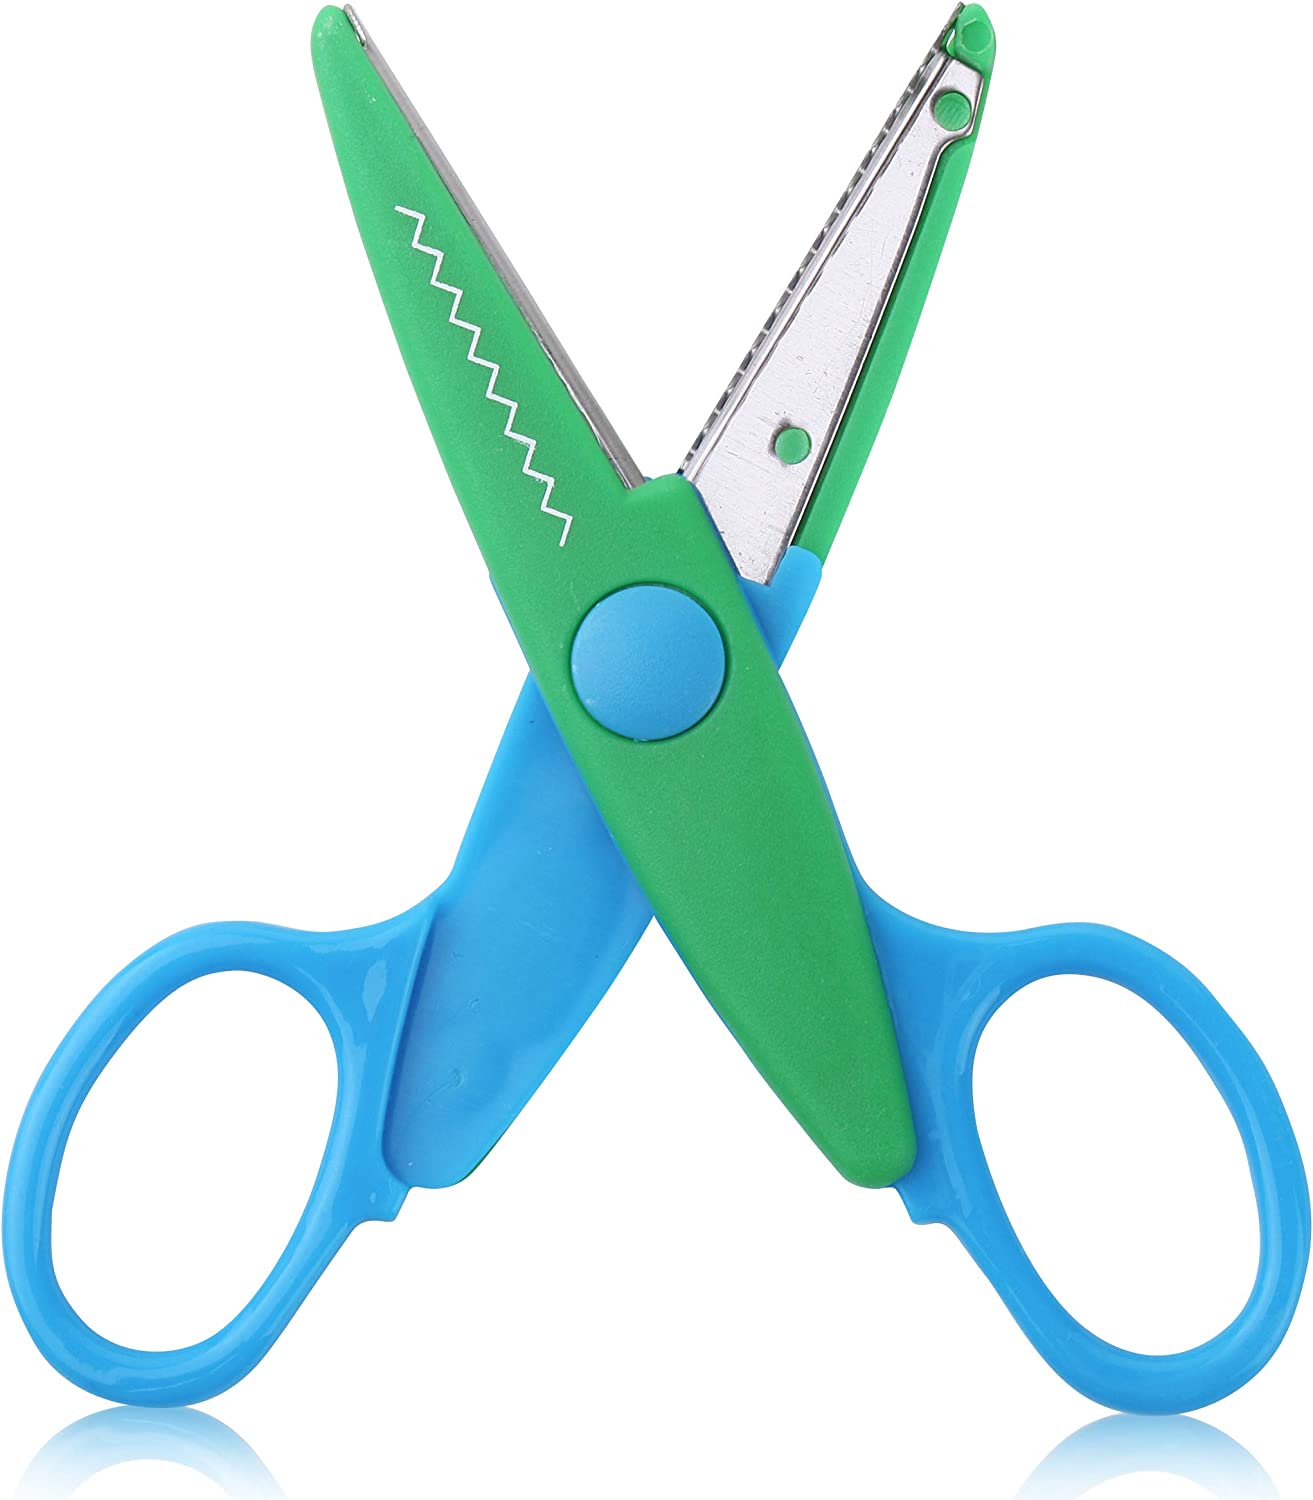 Orange & Green Craft/Scrapbook Scissors With Cool Design